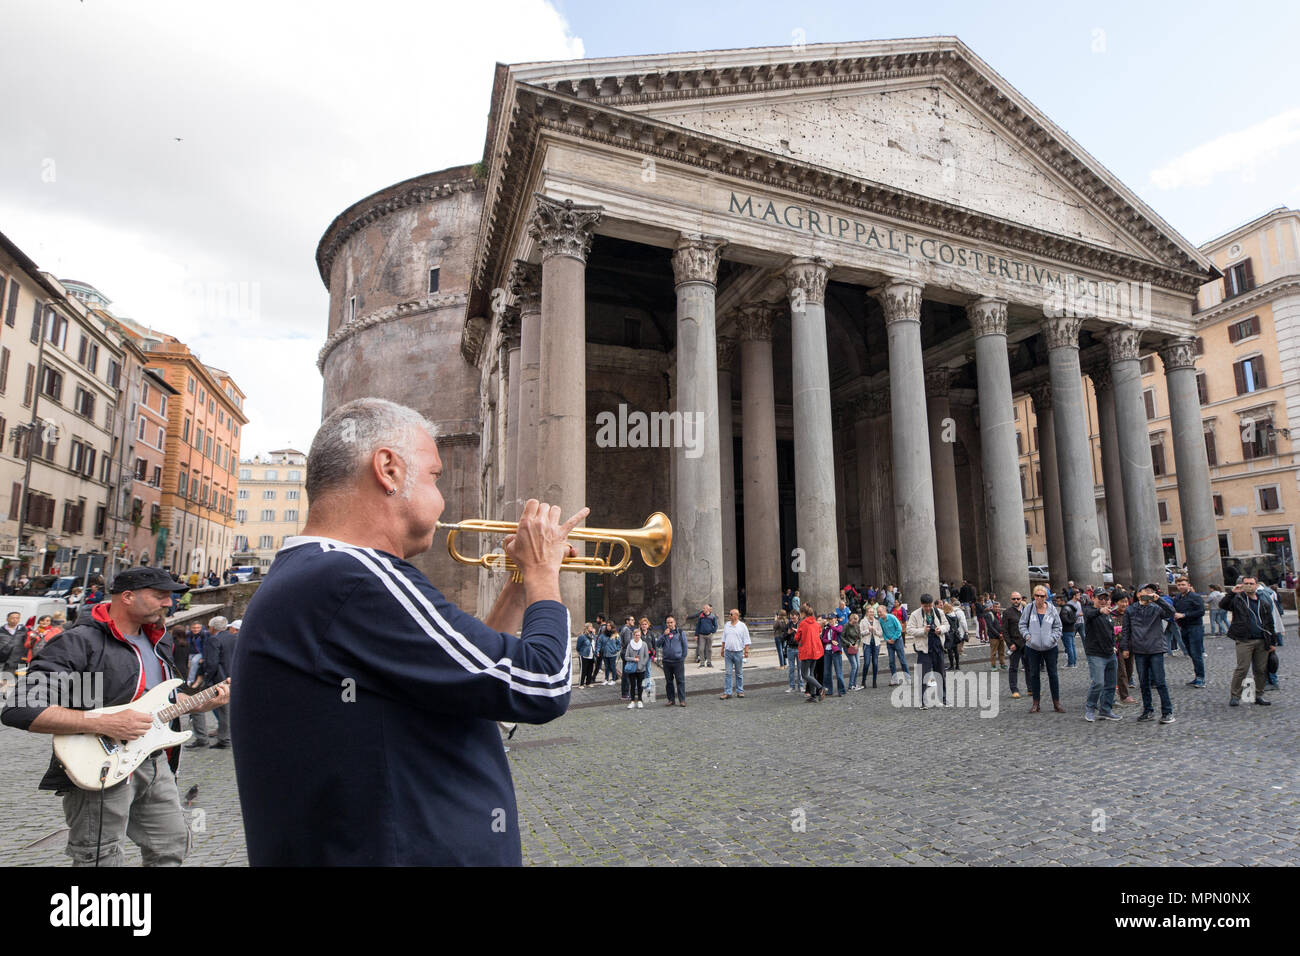 Piazza della Rotonda, Pantheon Rome Italy, scene tourists and trumpet player street musician. Stock Photo